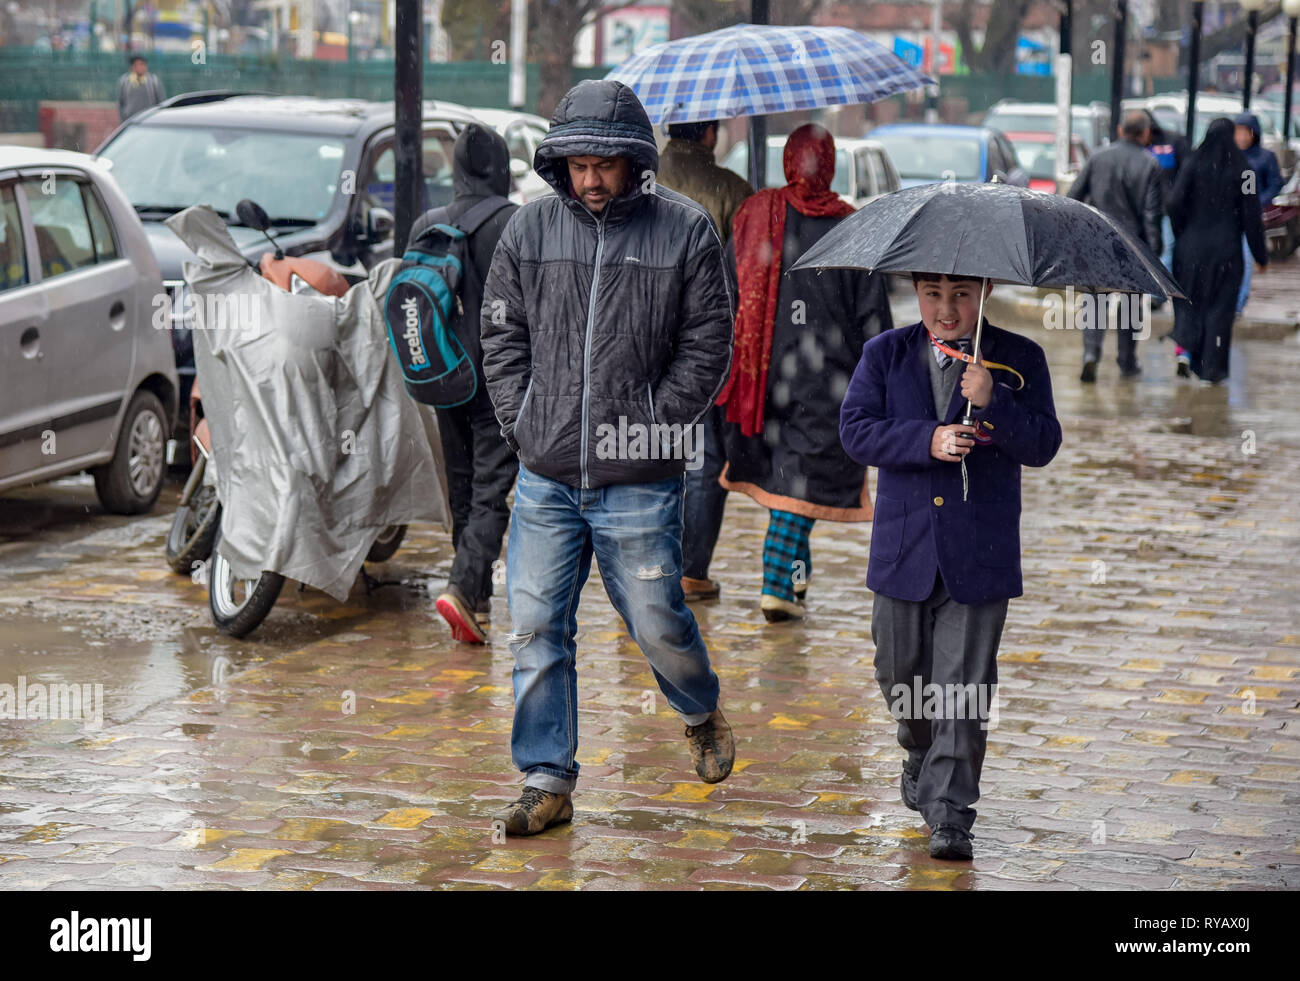 March 13, 2019 - Srinagar, Jammu and Kashmir, India - Kashmiri residents are seen walking on the street during rainy day in Srinagar. (Credit Image: © Idrees Abbas/SOPA Images via ZUMA Wire) Stock Photo